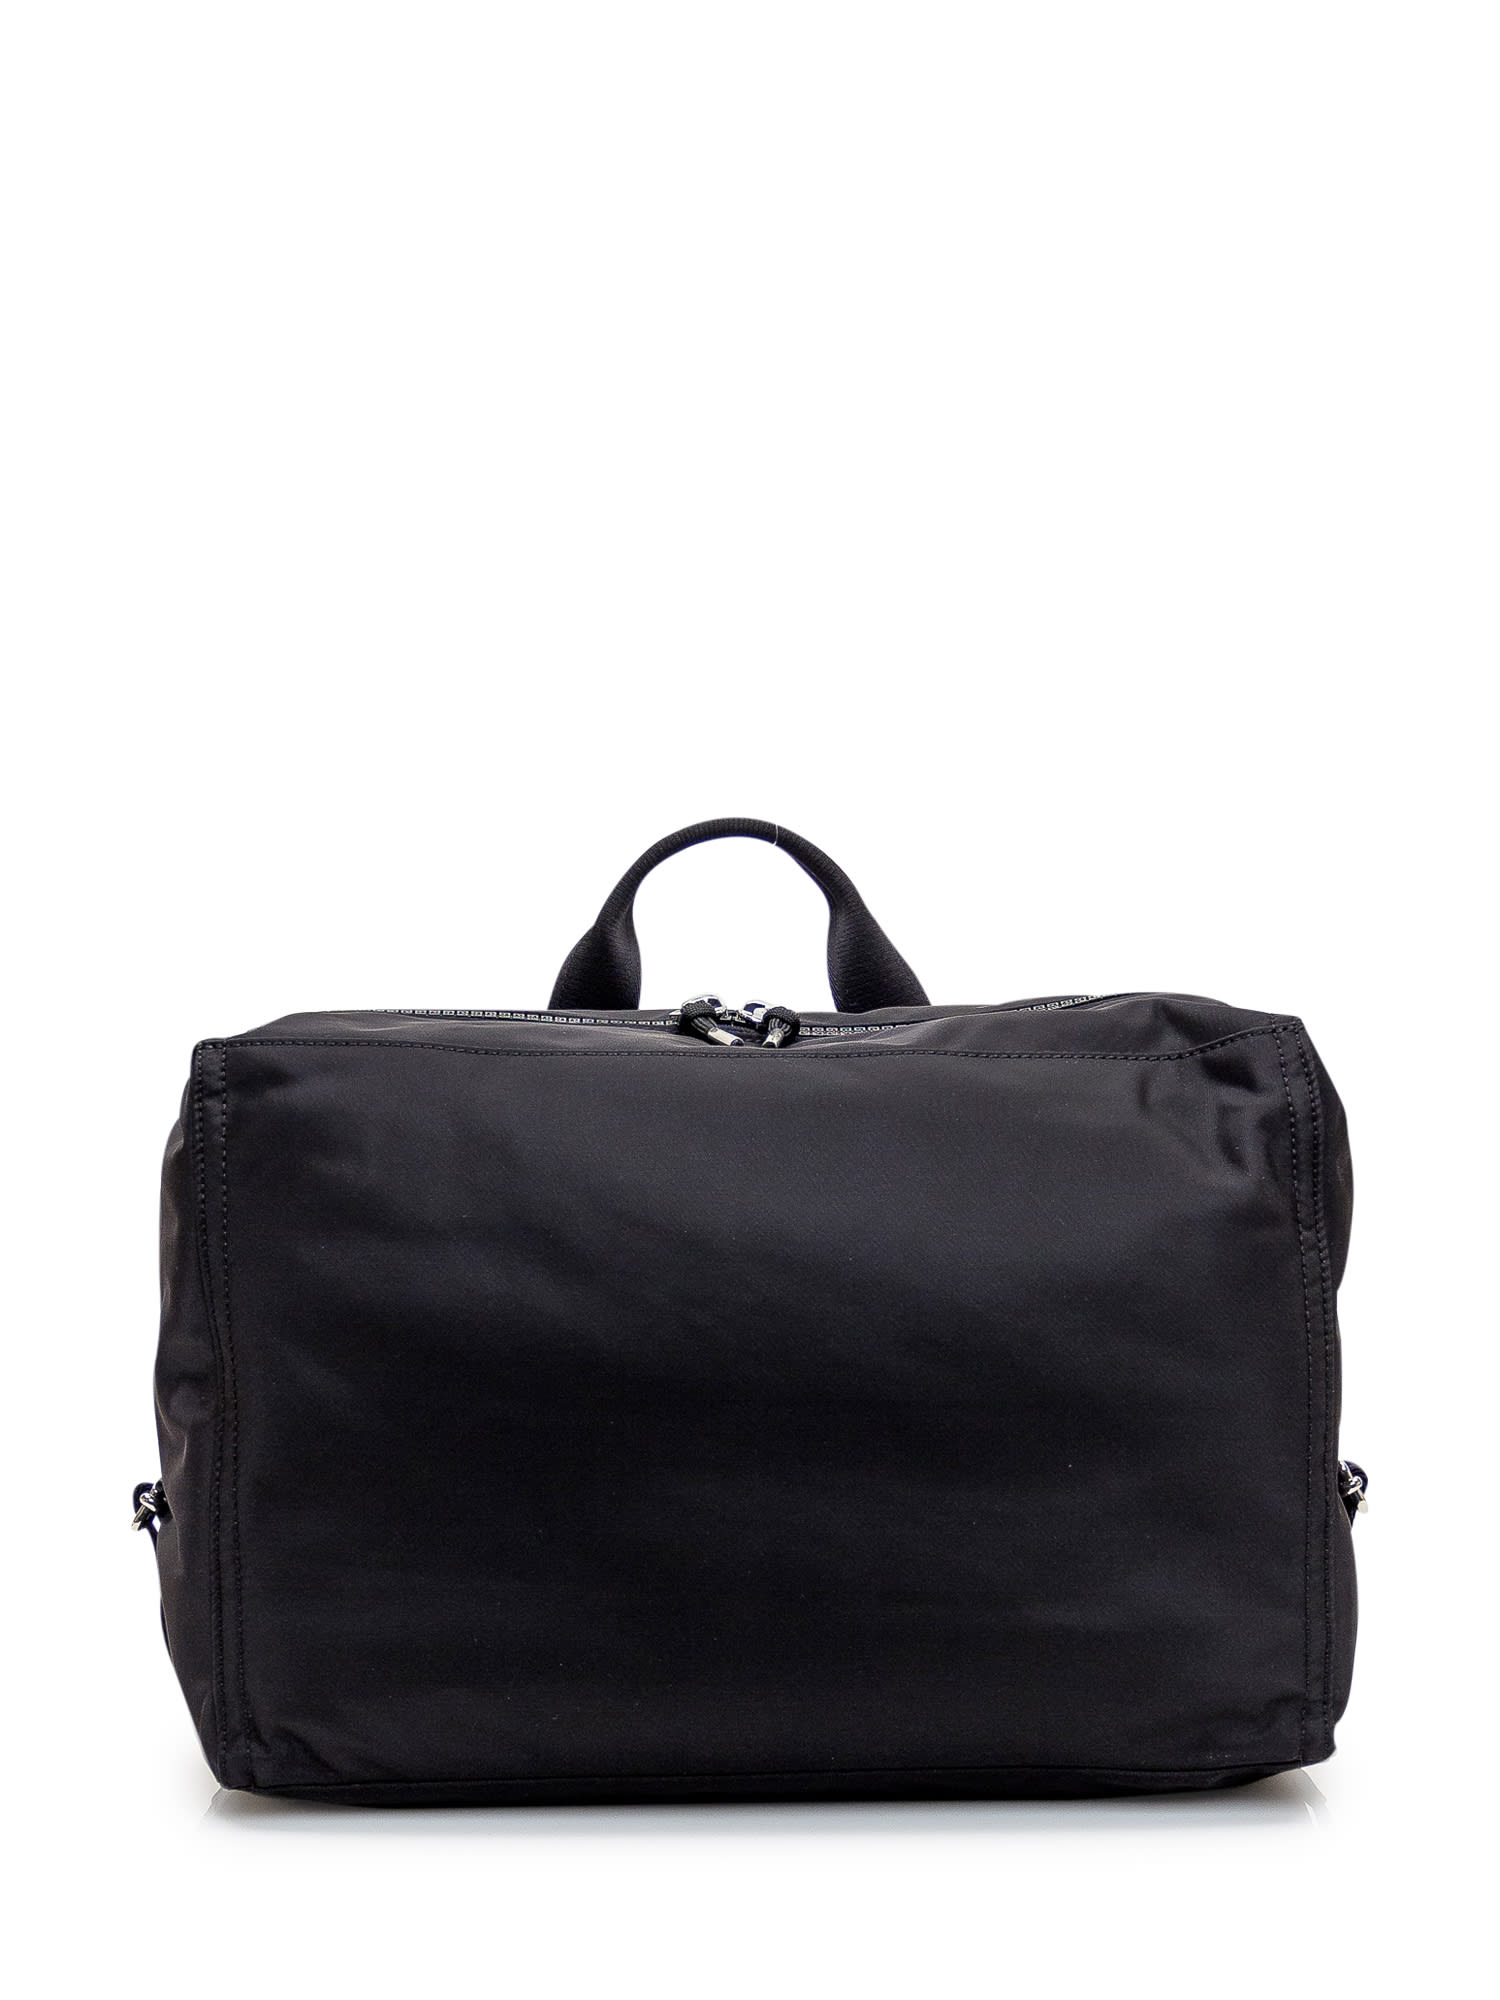 Givenchy Pandora Medium Bag In Black